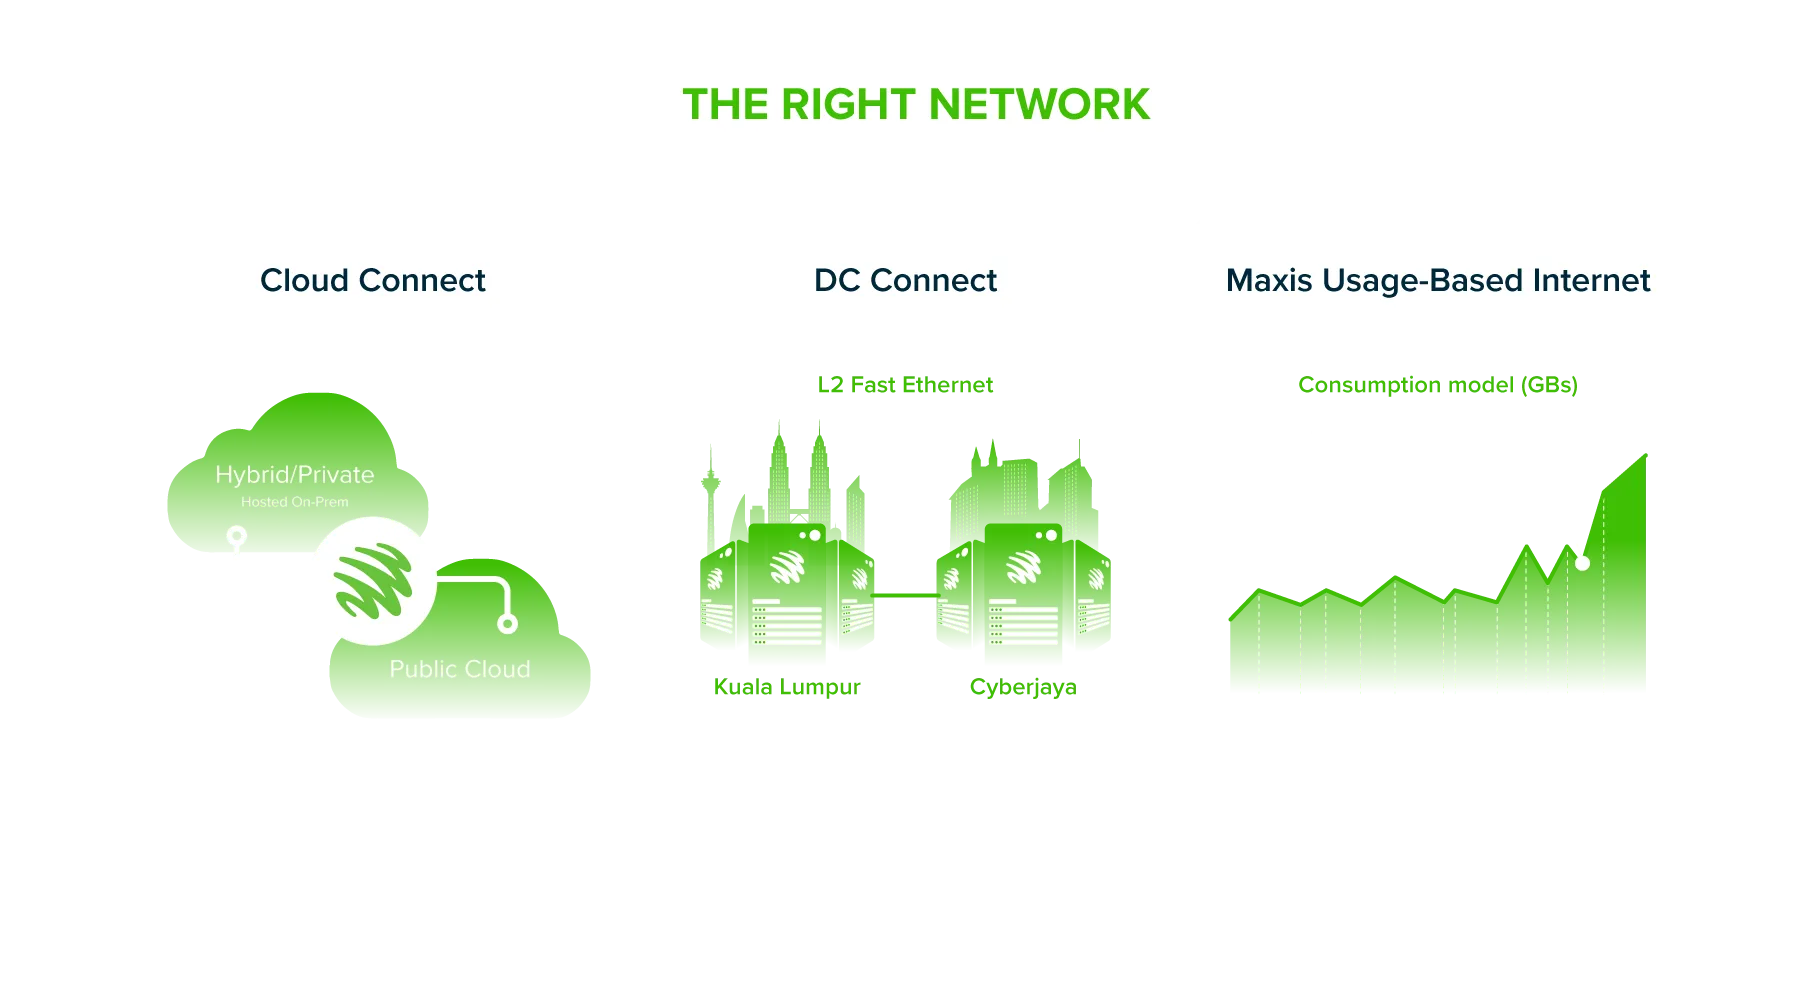 Maxis Business Data Centre - The Right Network Program Diagram (desktop)